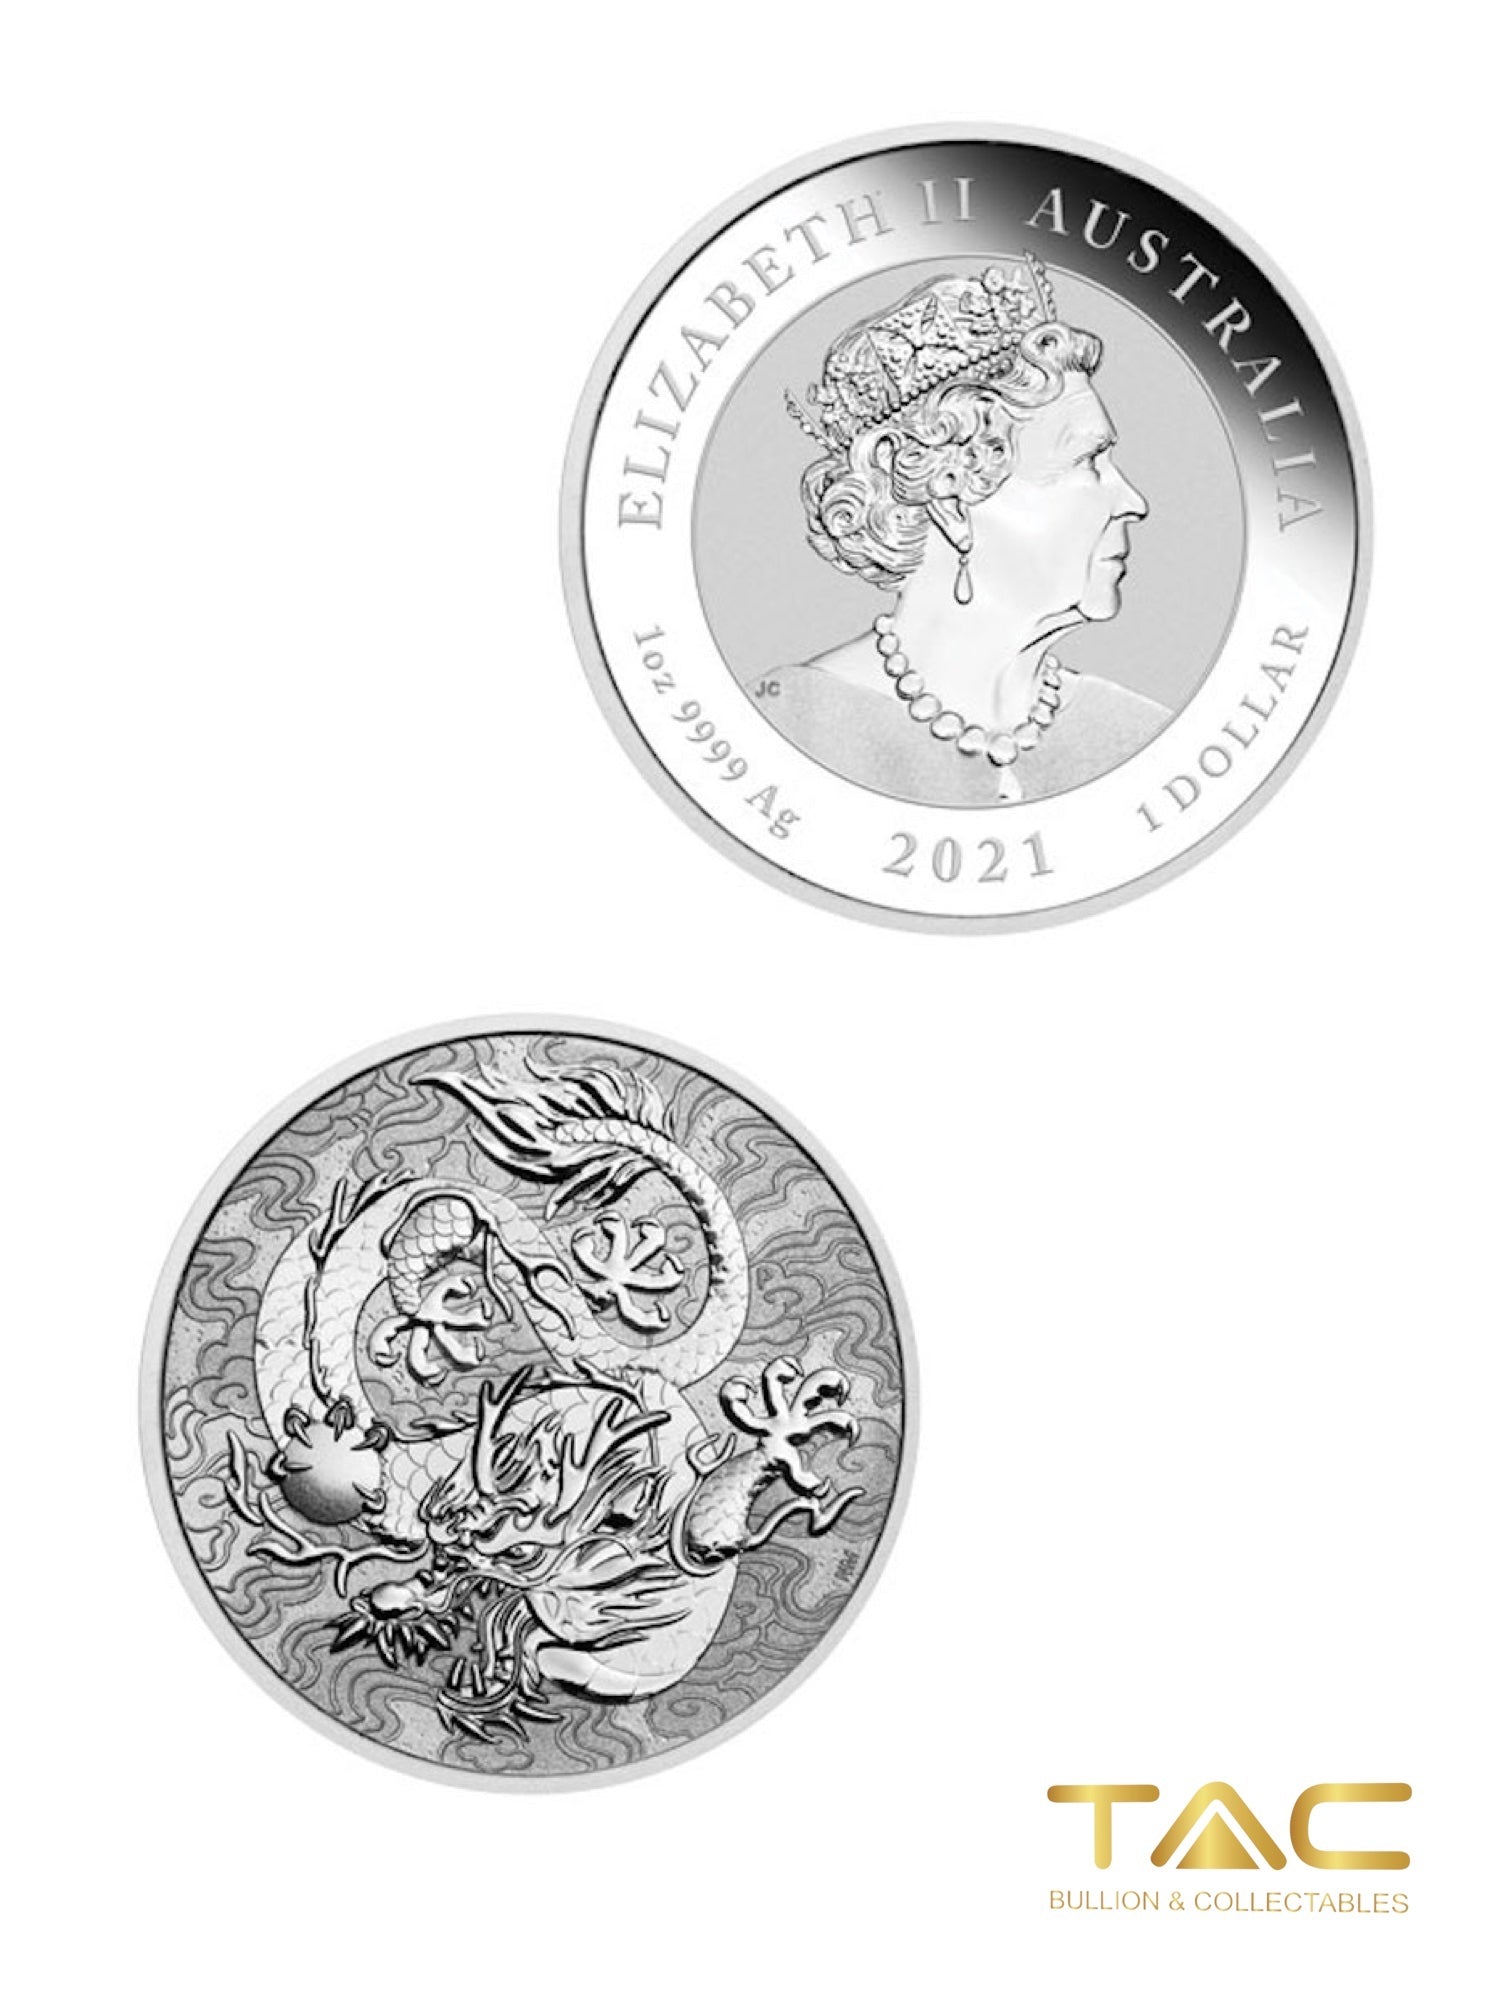 1 oz Silver Coin - 2021 Dragon - Perth Mint